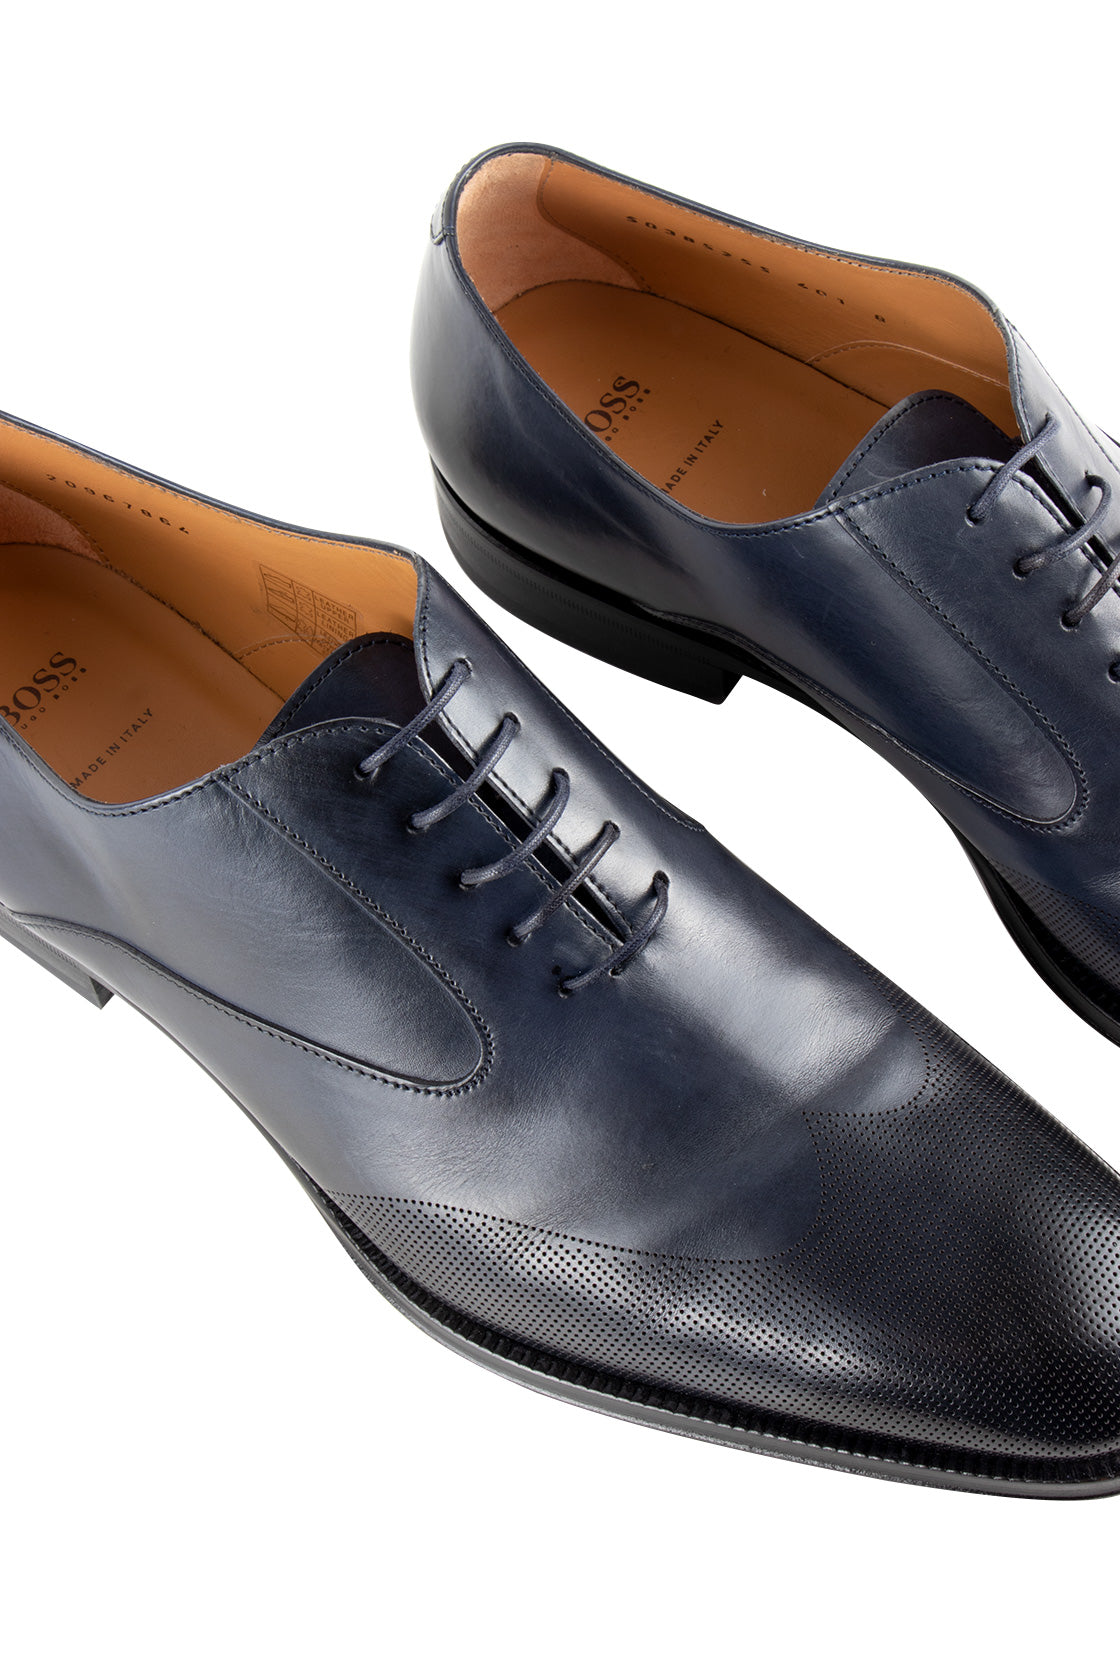 Hugo Boss Cambridge Oxford Shoe Blue